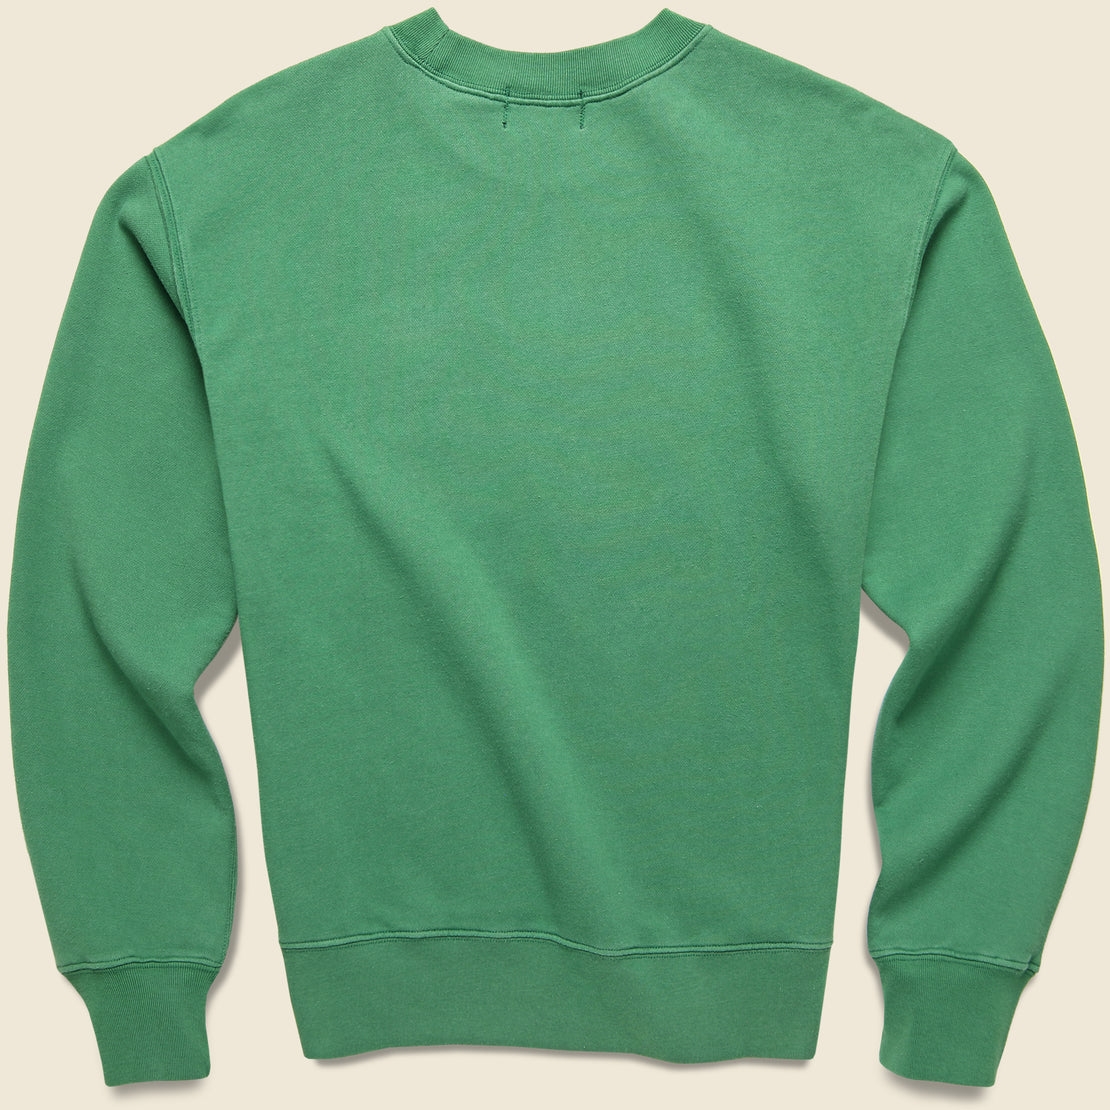 60s Varsity Sweatshirt - Fairway - Levis Vintage Clothing - STAG Provisions - Tops - Fleece / Sweatshirt